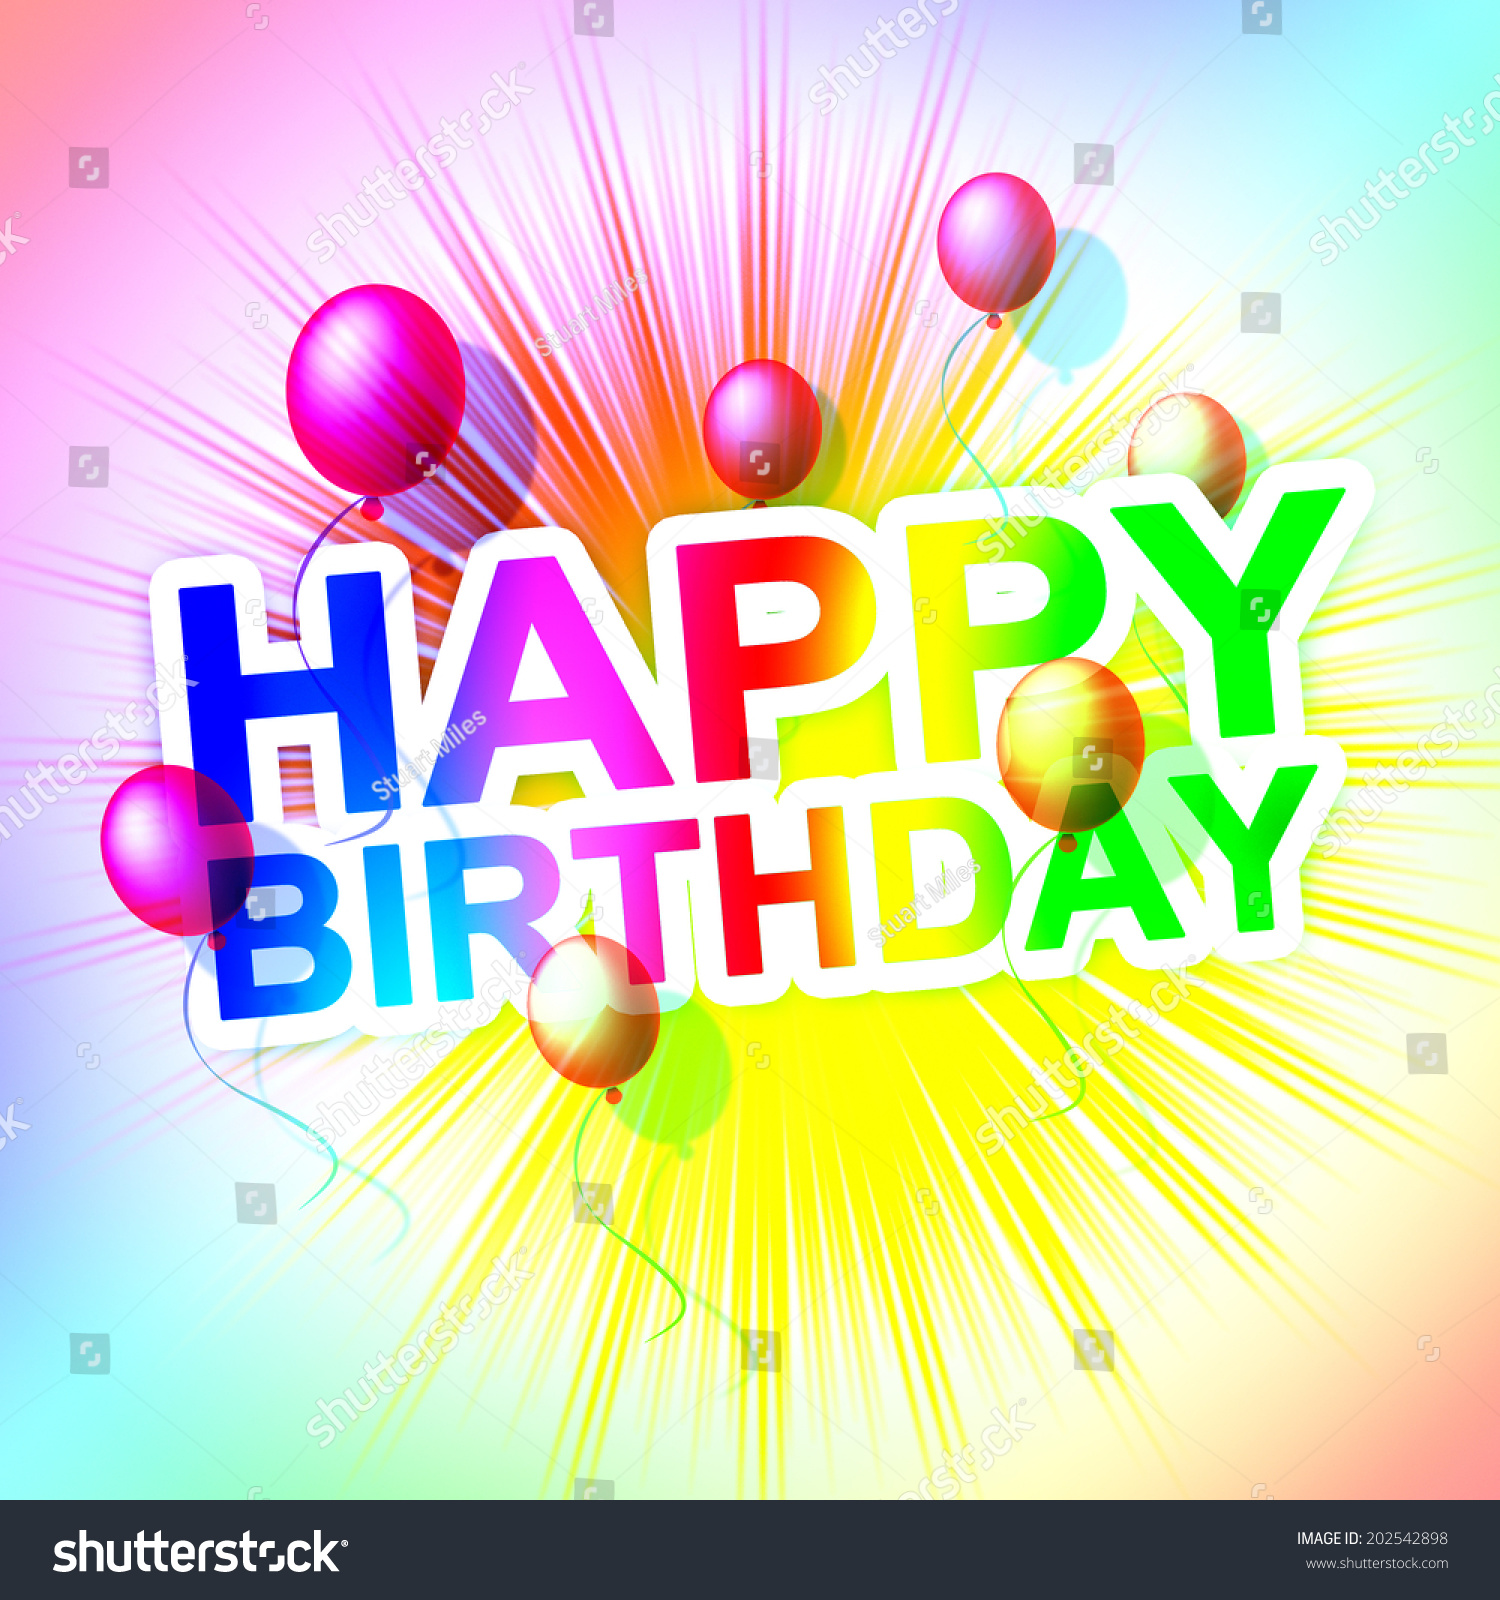 Happy Birthday Indicating Celebration Celebrate And Greeting Stock ...